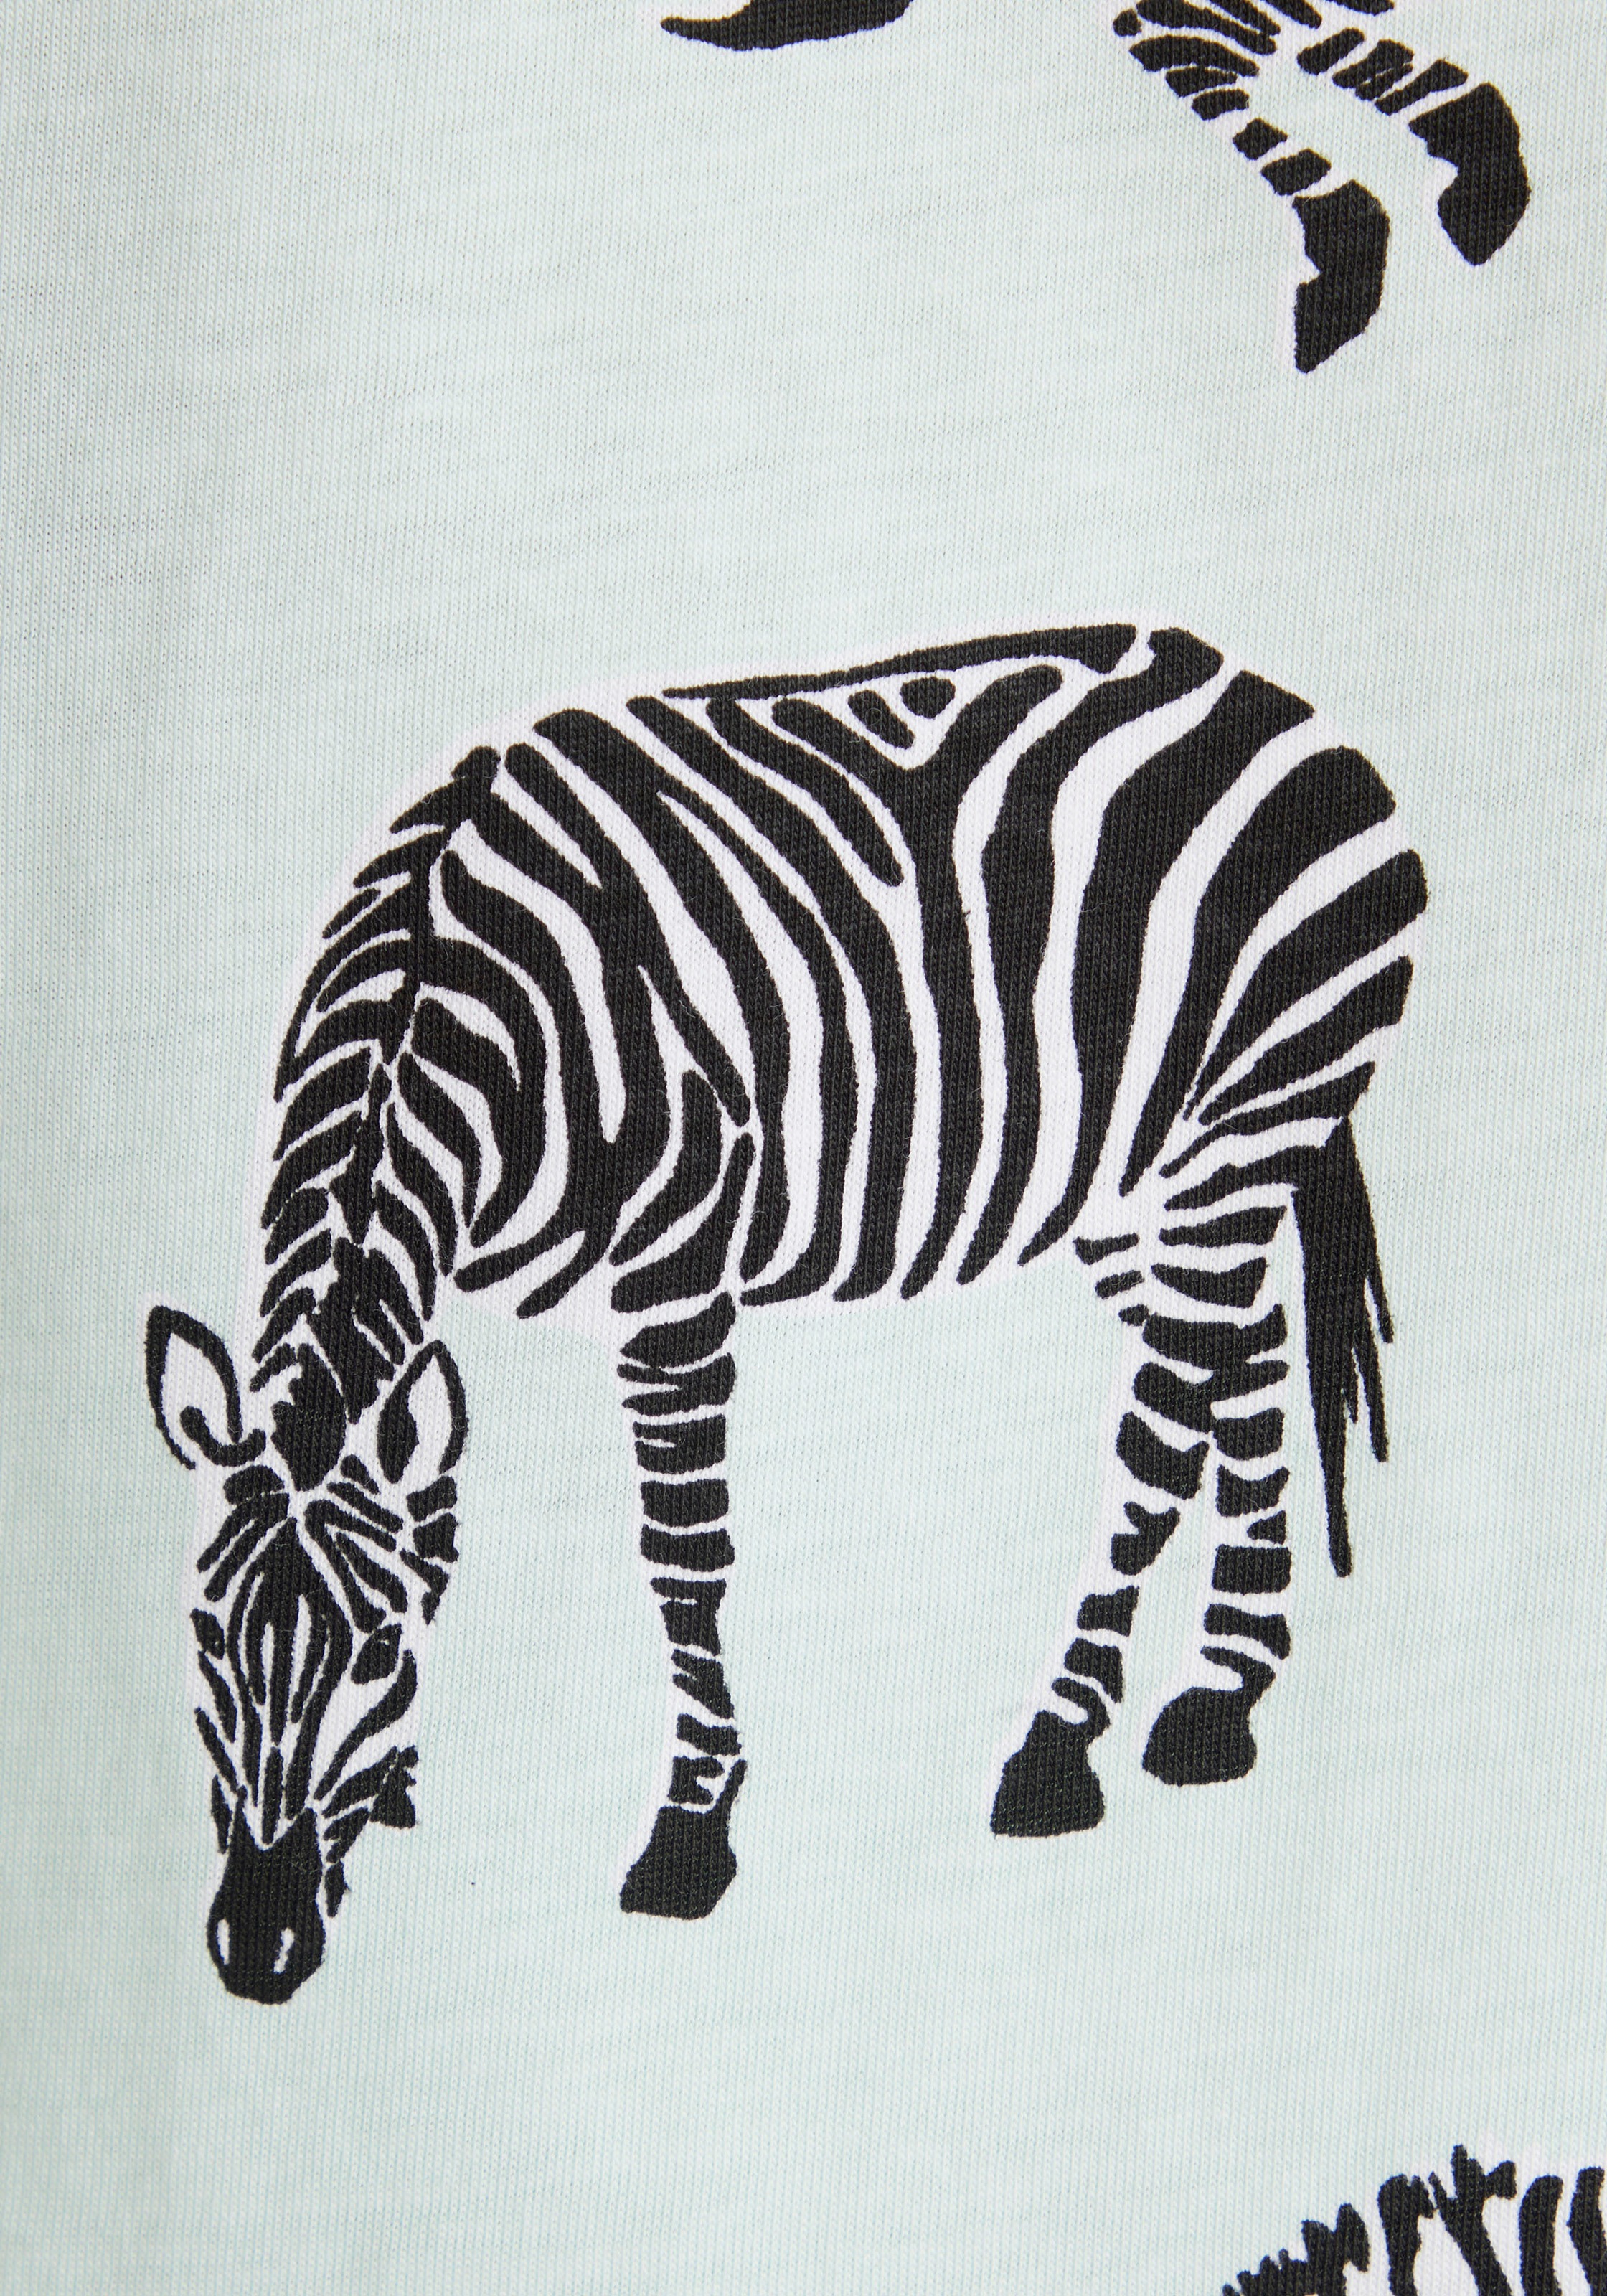 Vivance Dreams Pyjama, (2 tlg.), mt Animal Alloverprint online kaufen